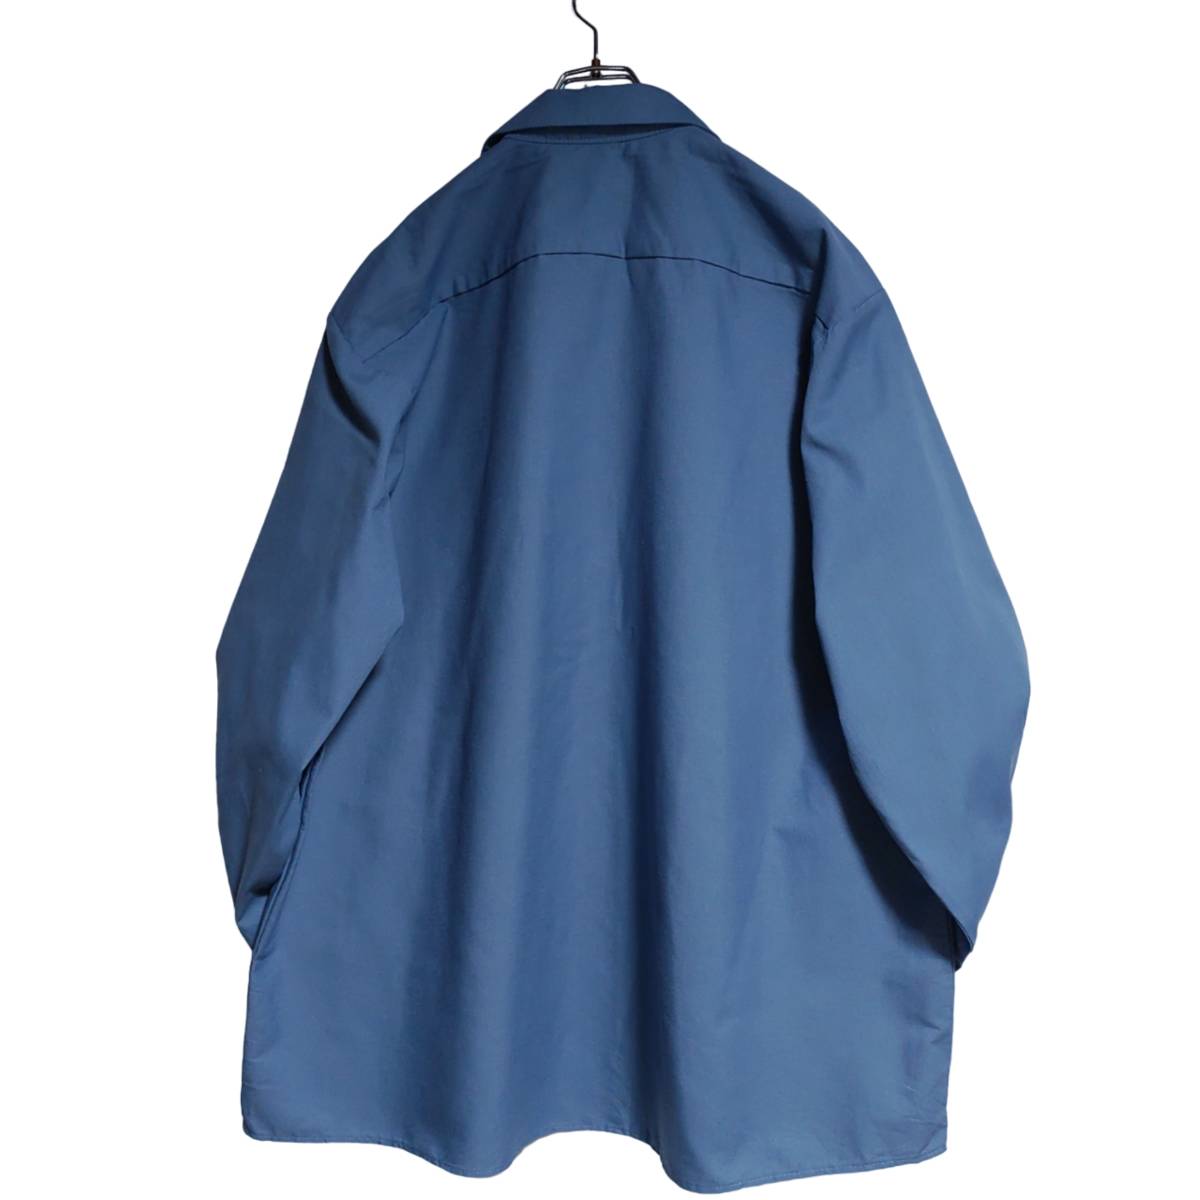 RED KAP 長袖ワークシャツ size 2XL オーバーサイズ ブルー ゆうパケットポスト可 胸 刺繍 HUSSMANN 古着 洗濯 プレス済 906_画像3